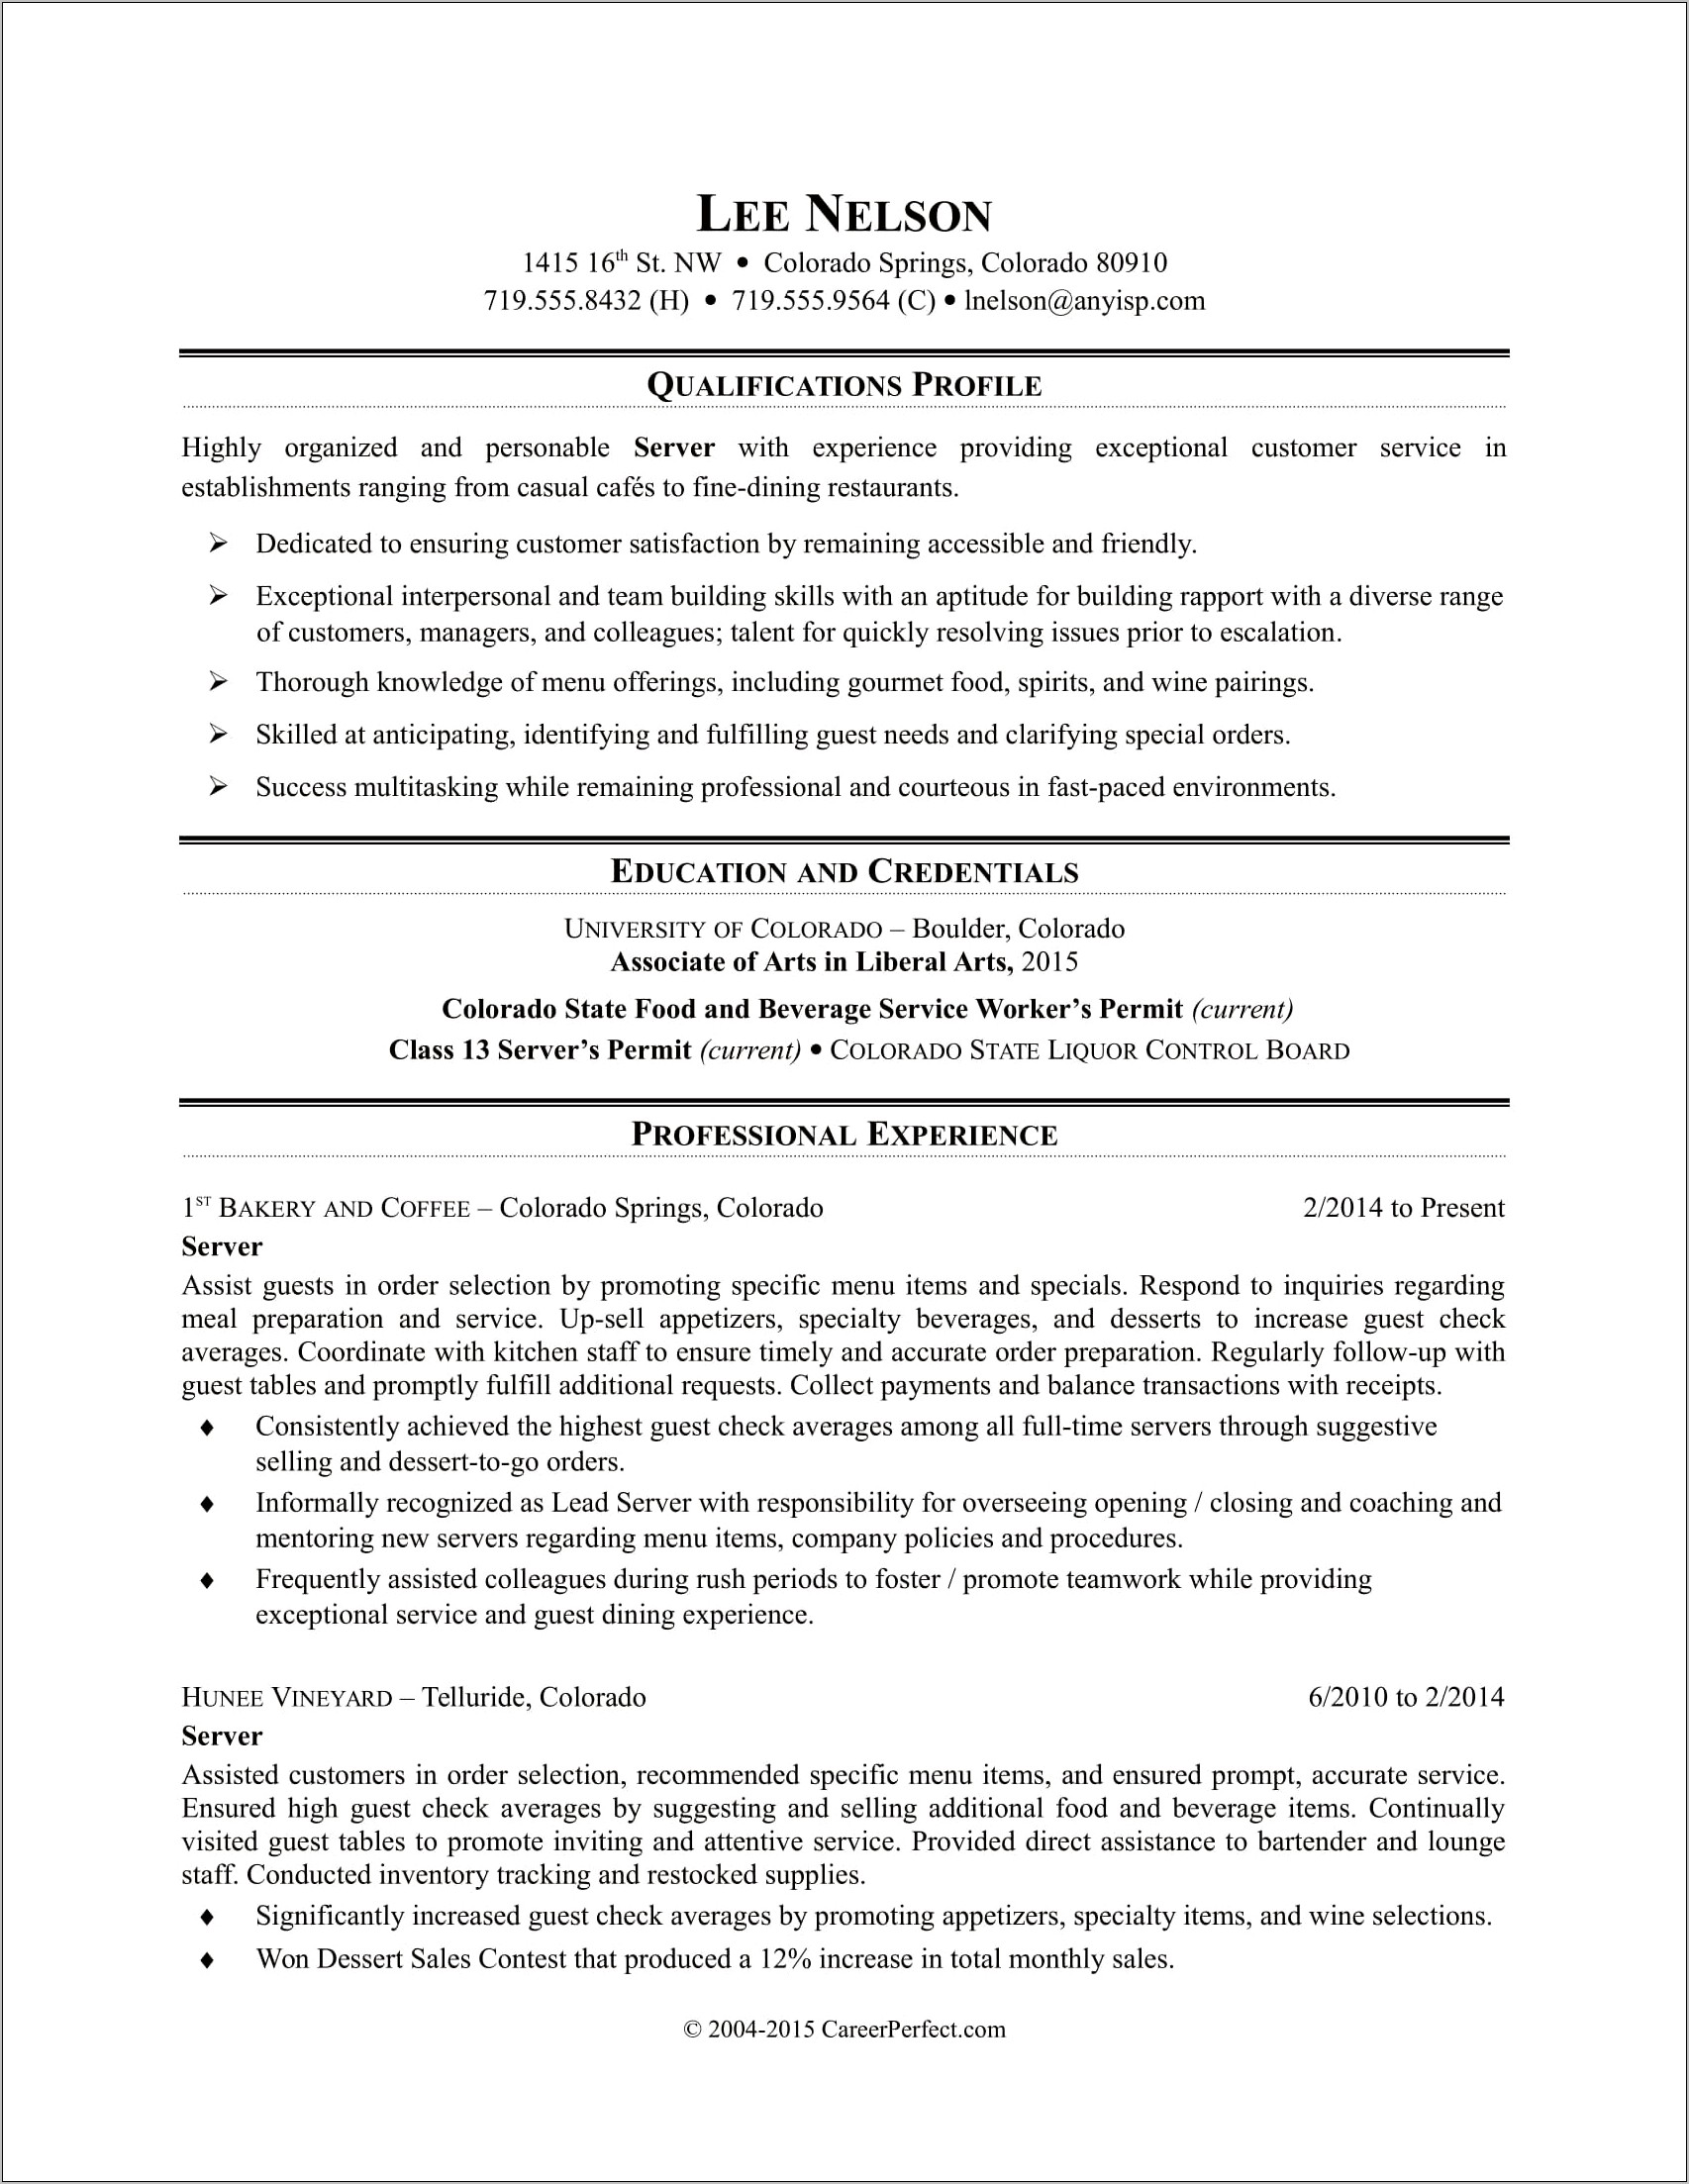 Sales Department Job Description For Resume